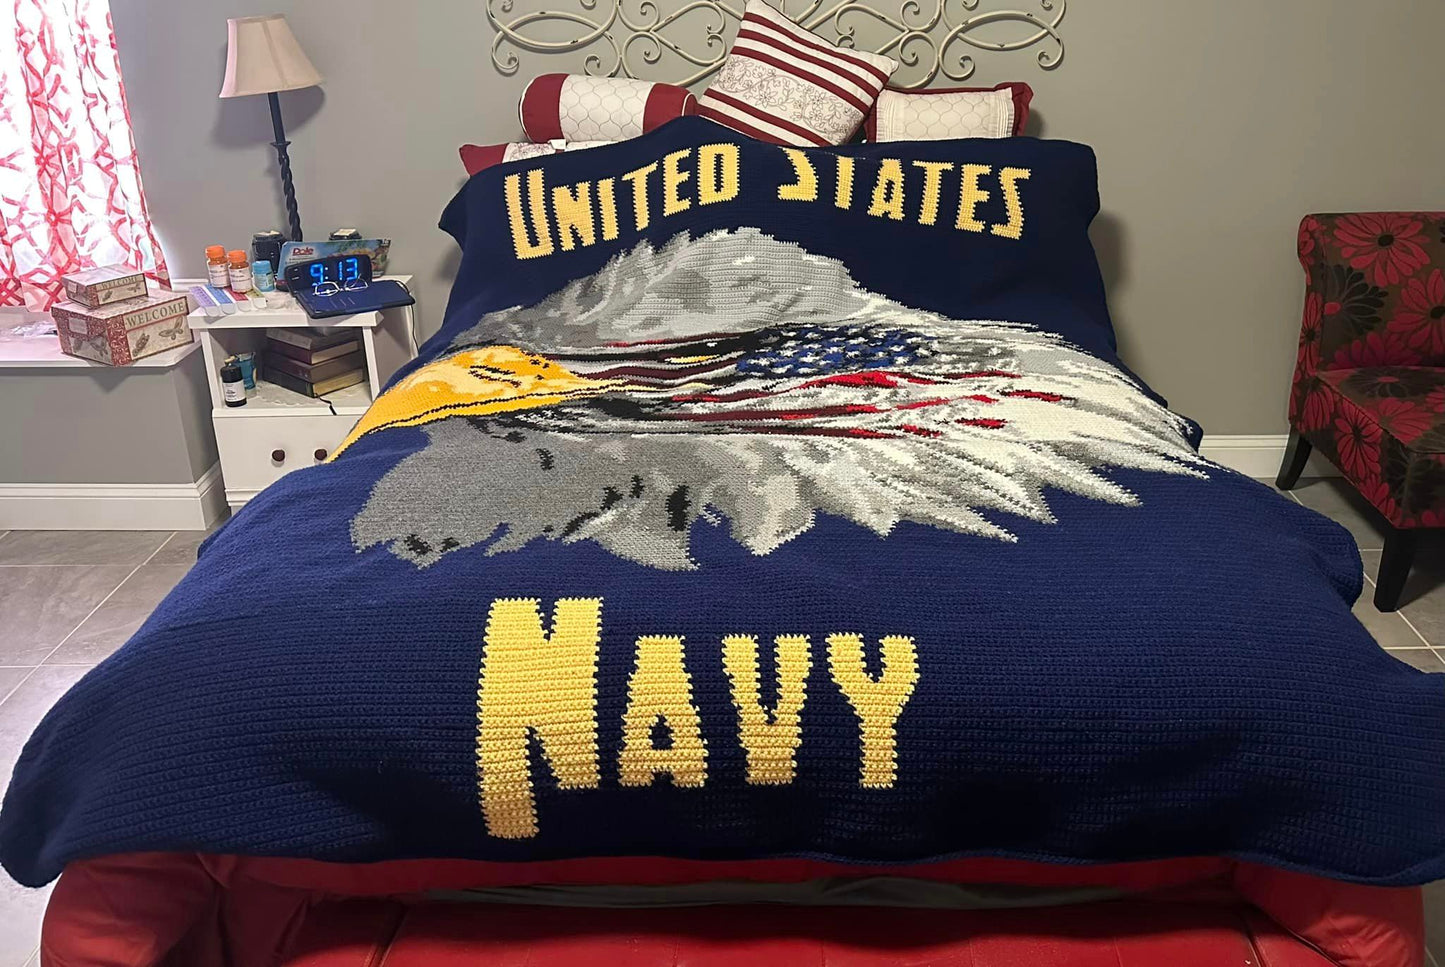 US Navy Eagle Crochet Graphghan Pattern